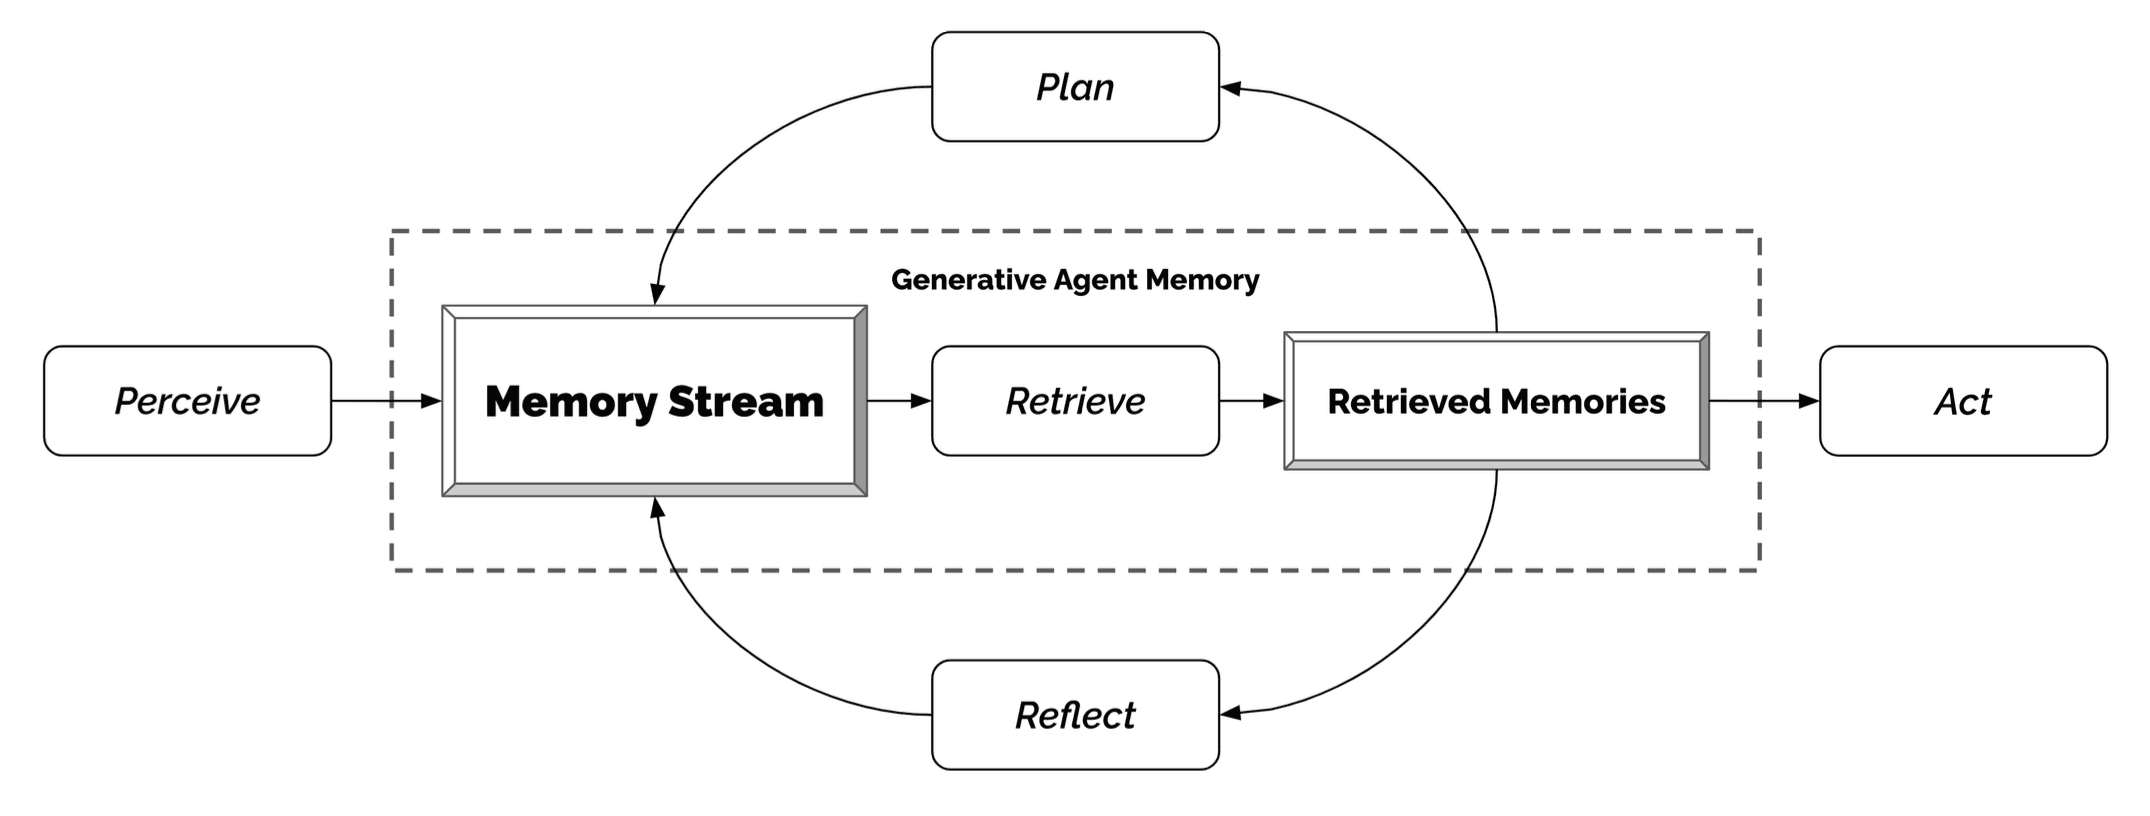 The generative agent architecture